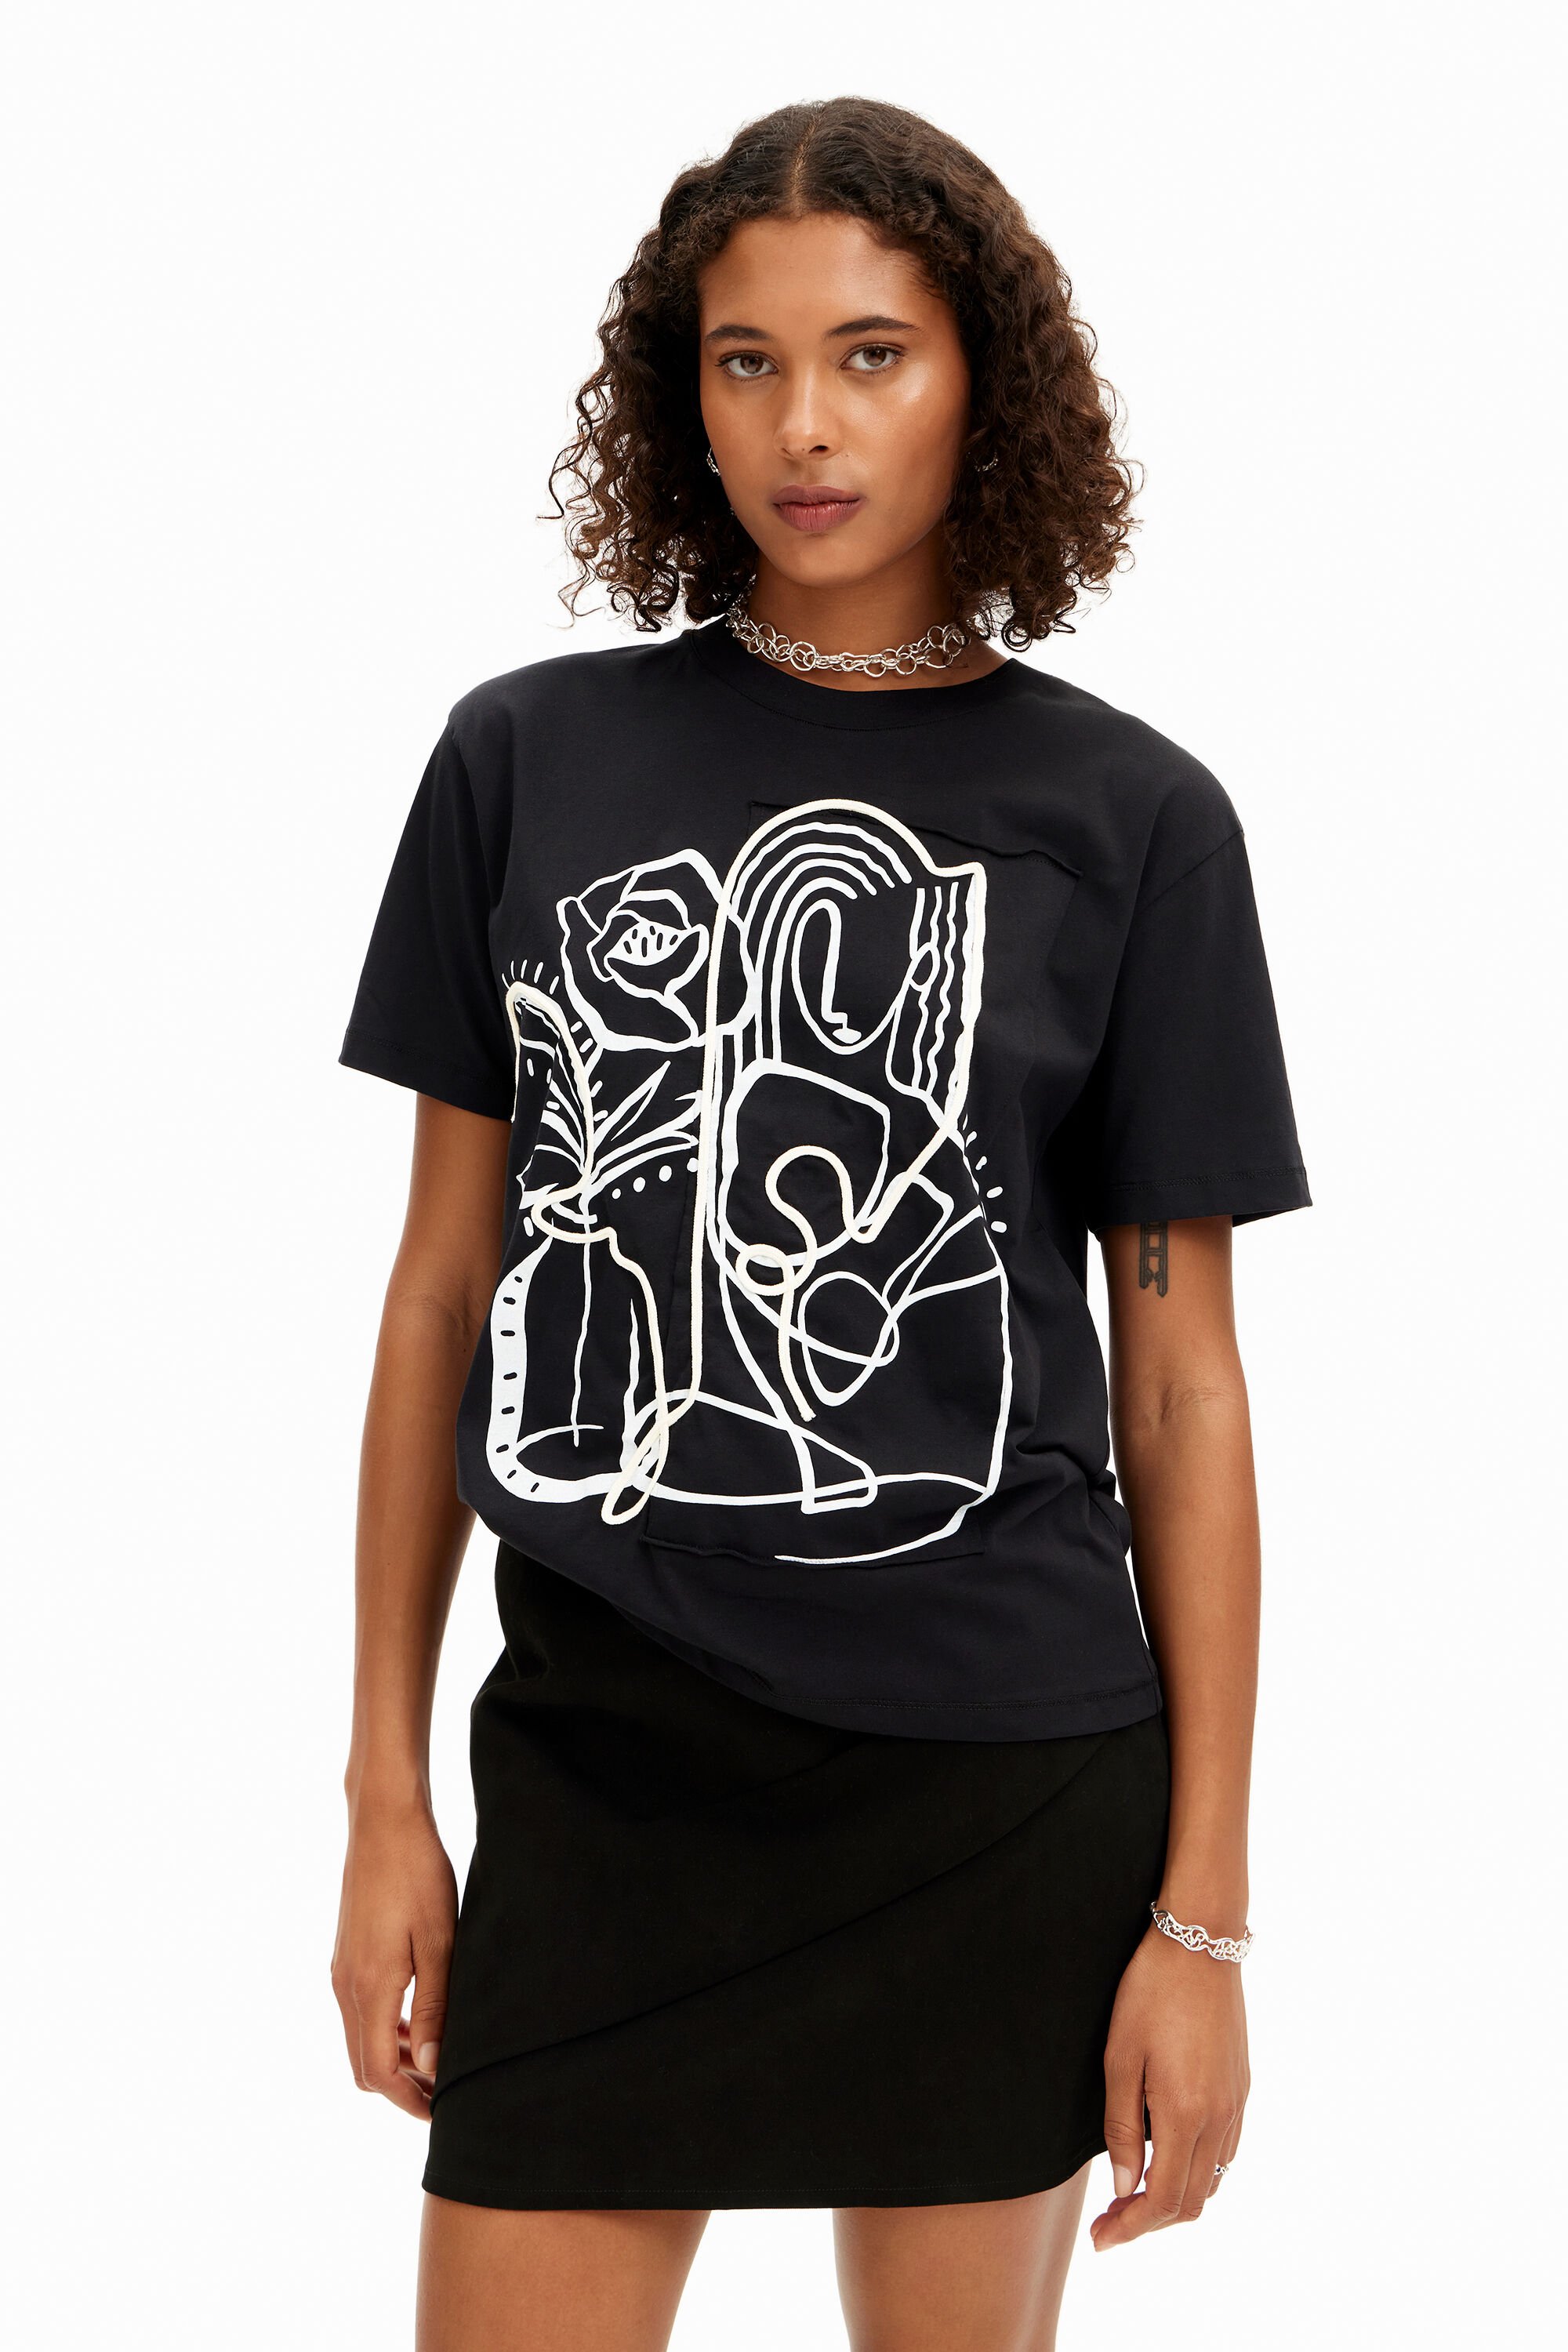 Desigual Arty T-shirt illustratie - BLACK